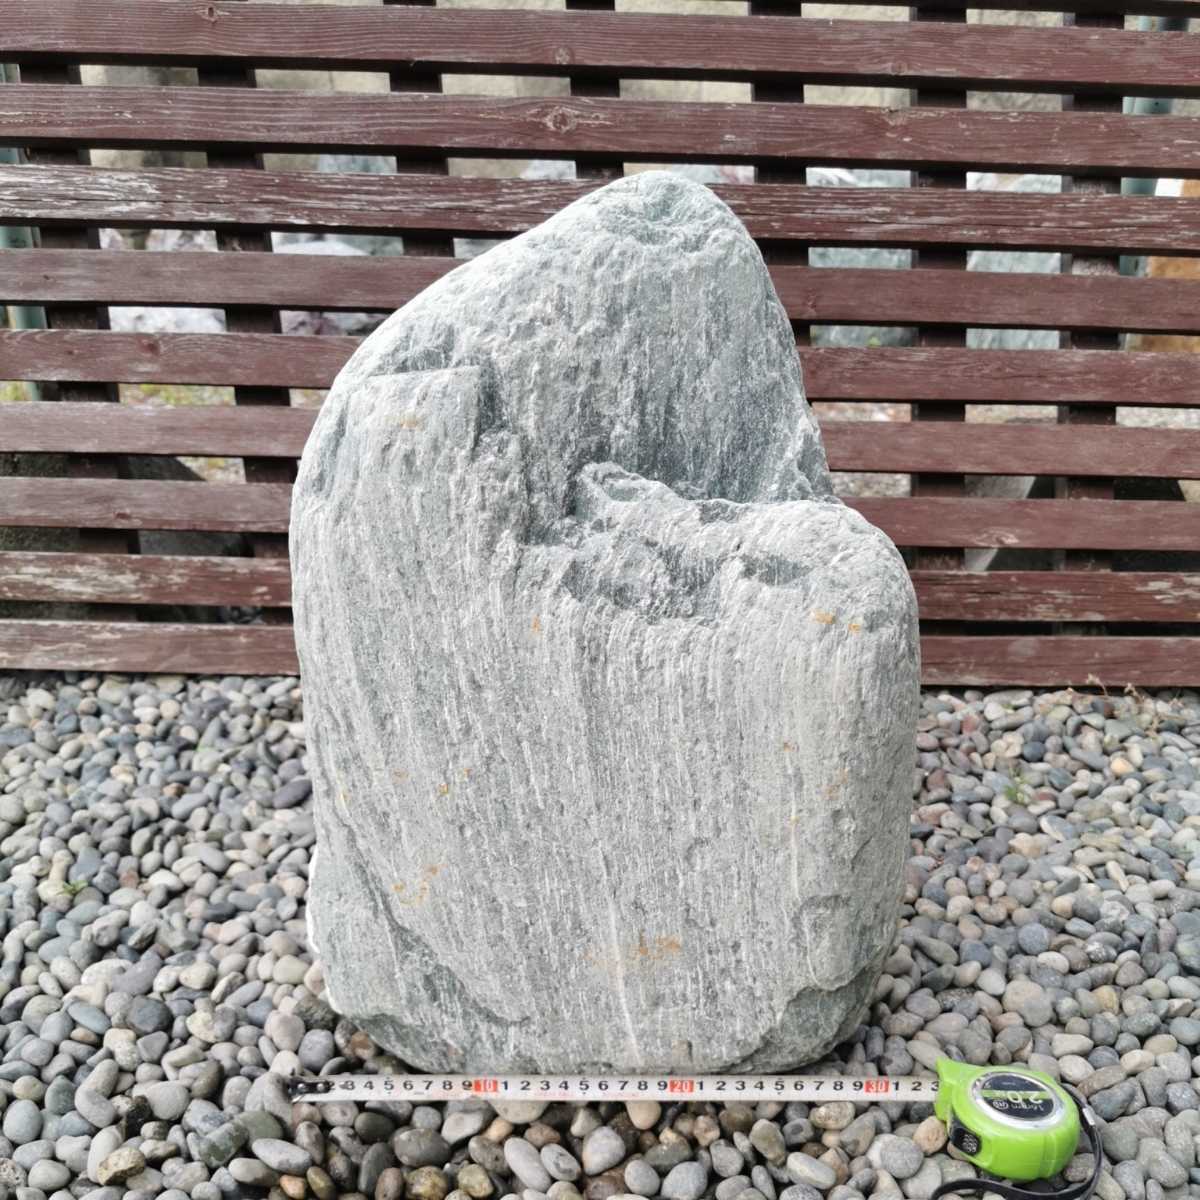  three wave stone 33.2 kilo garden stone appreciation stone stone tray stone suiseki st light . garden tsubo garden bonsai gardening ornament objet d'art interior gravel 